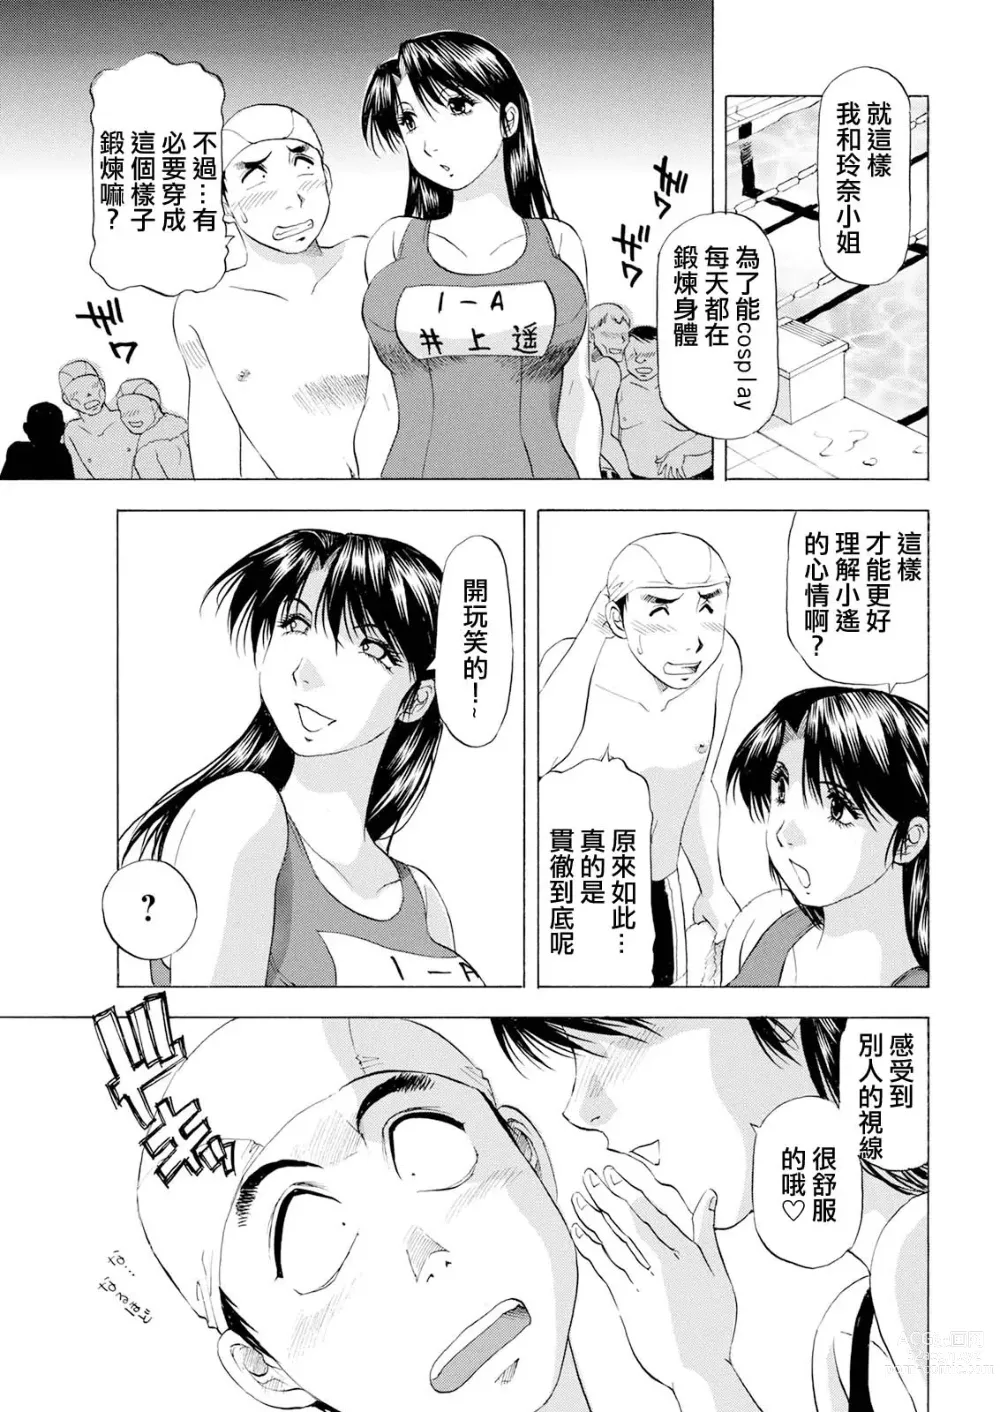 Page 5 of manga S.S.T